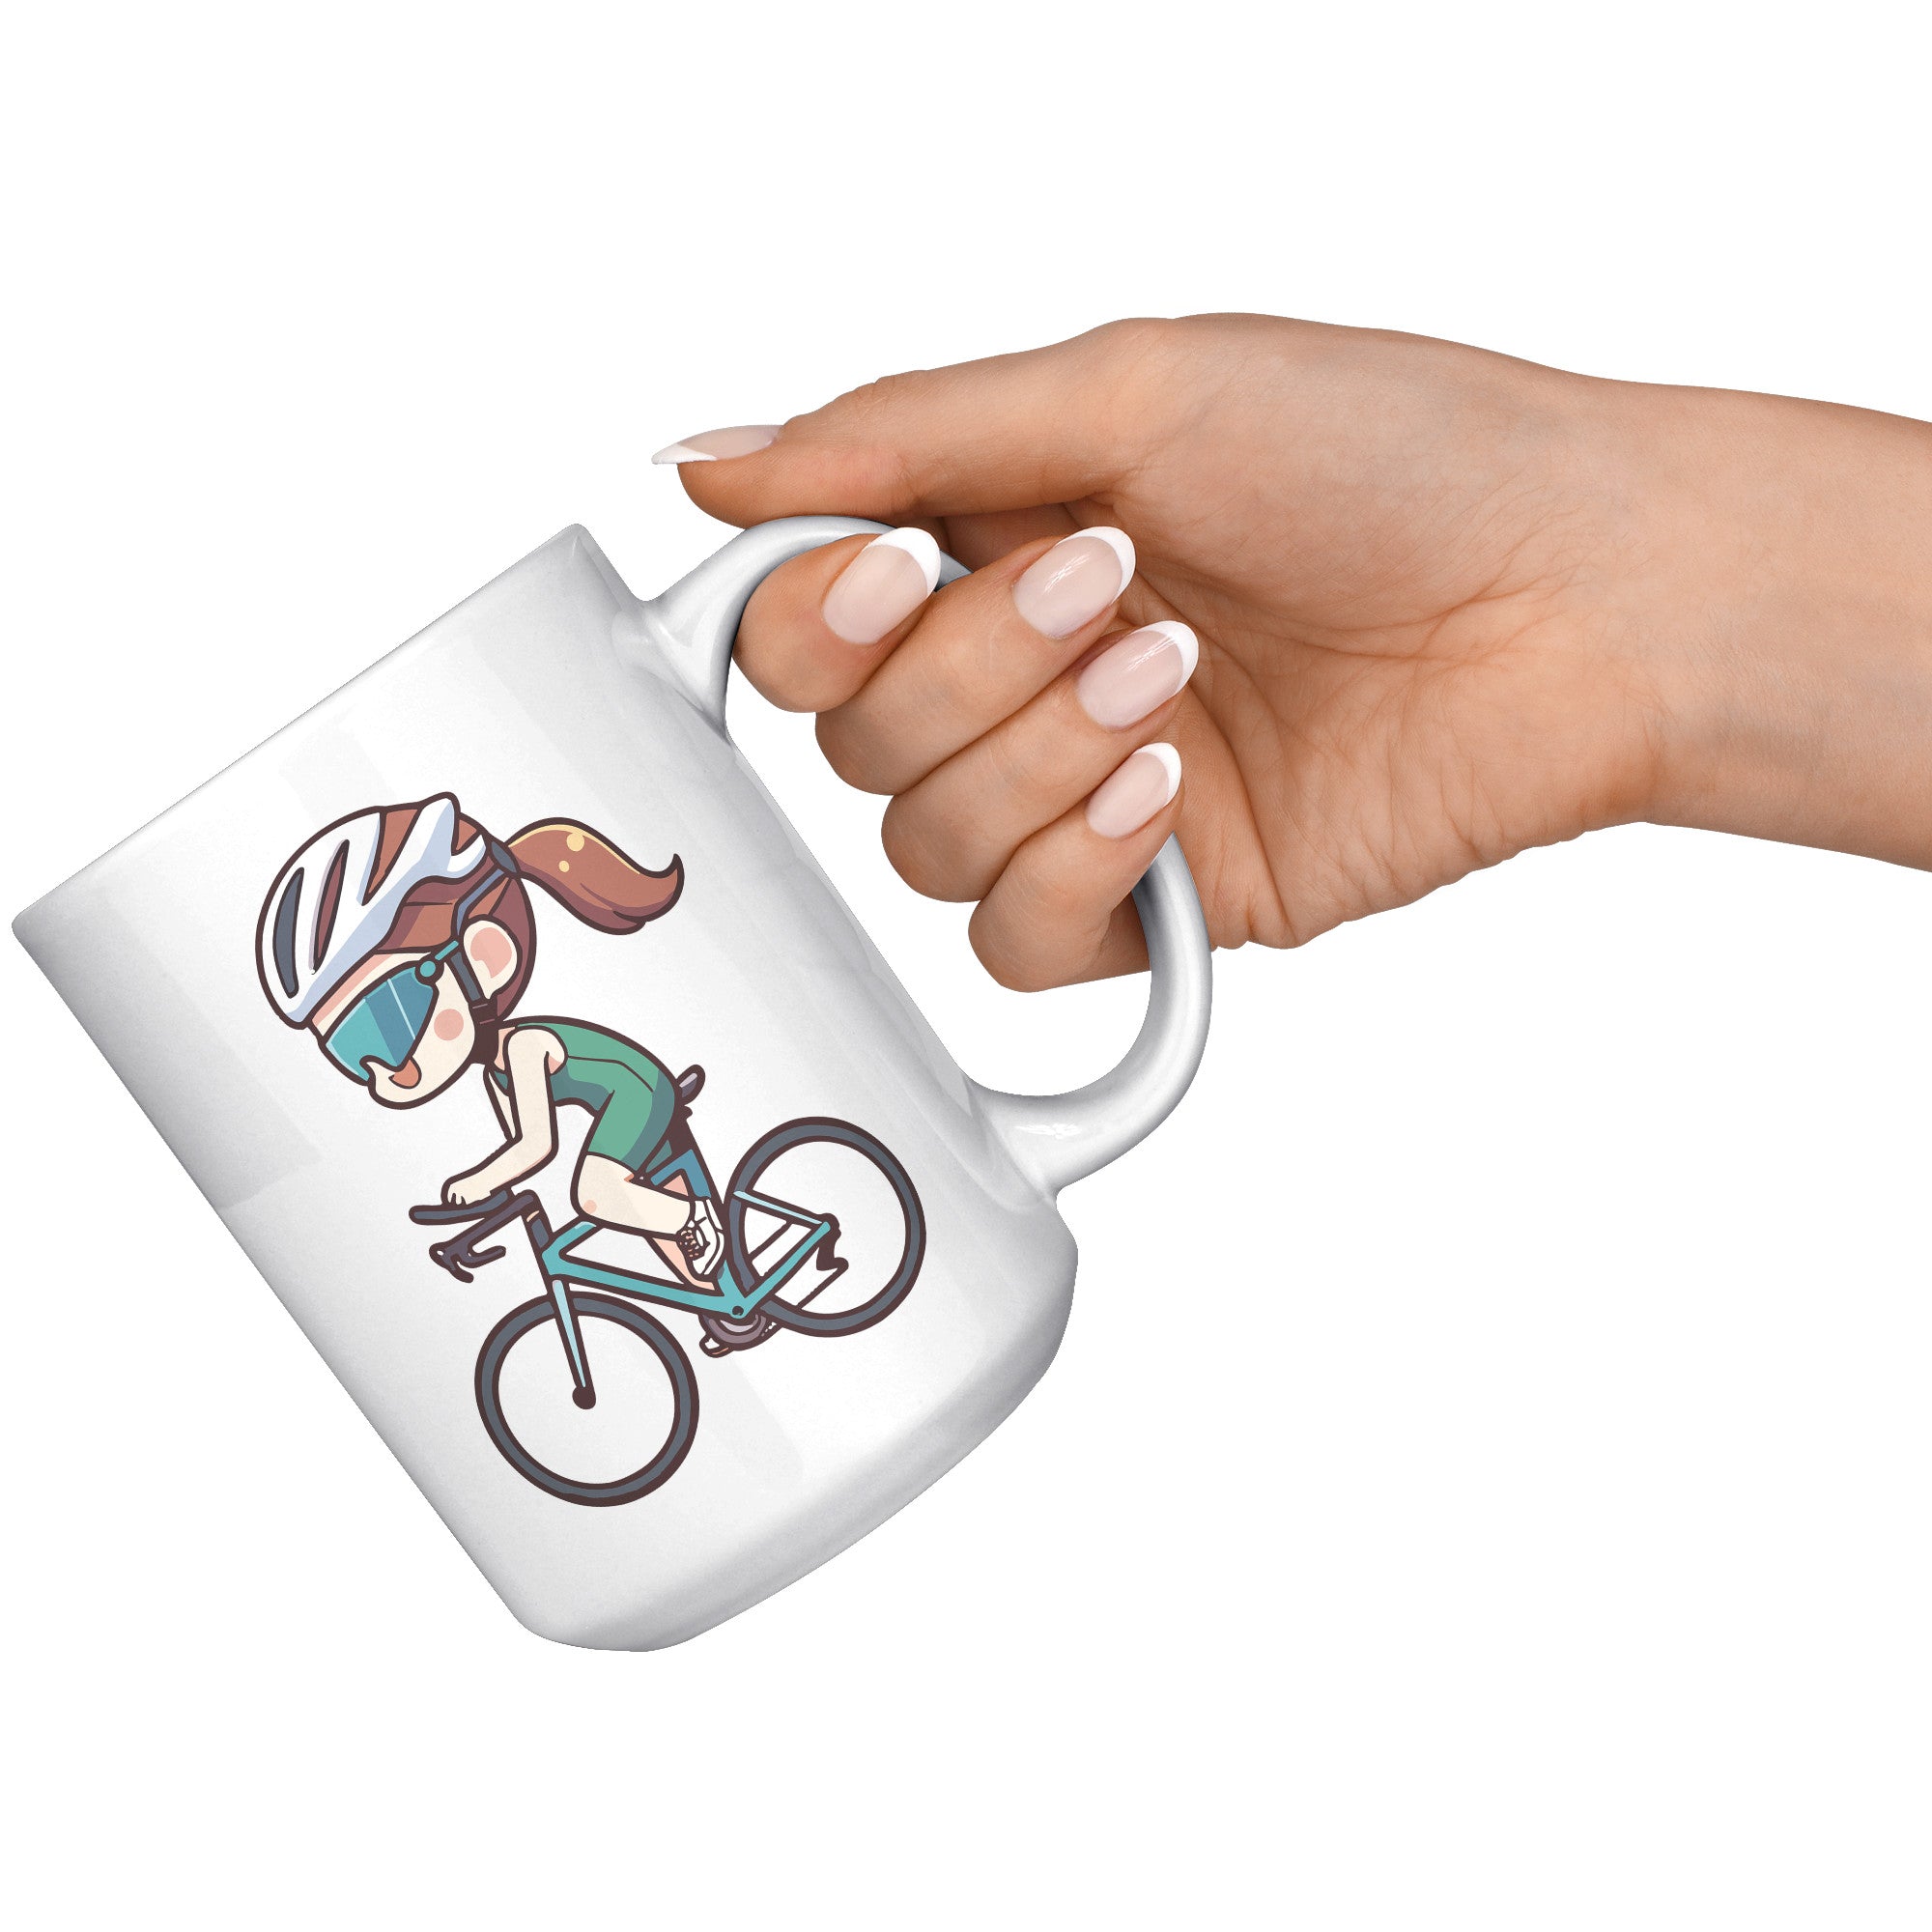 "Funko Pop Triathlon Athlete Coffee Mug - Multisport Morning Brew Cup - Ideal Gift for Triathletes - Swim, Bike, Run Inspired Mug" - H1